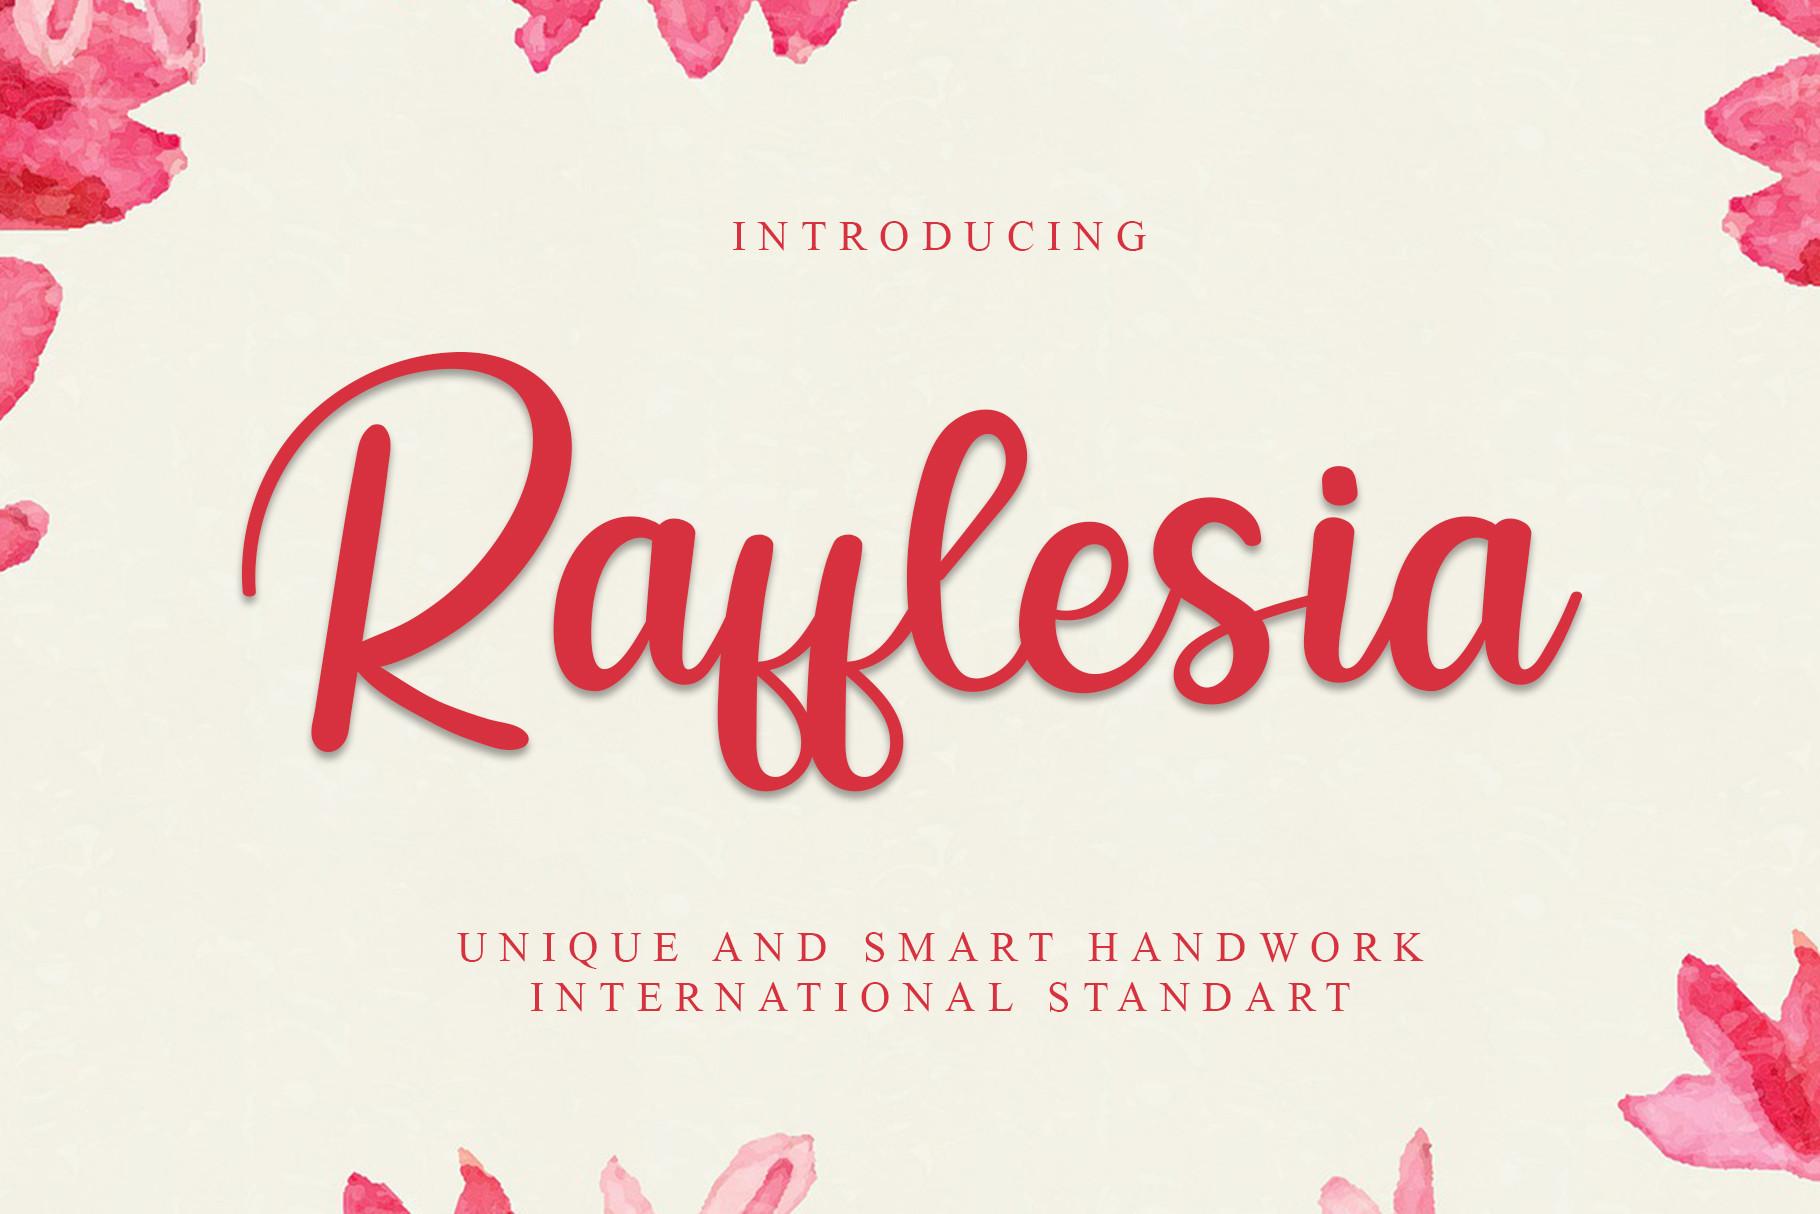 Rafflesia Font